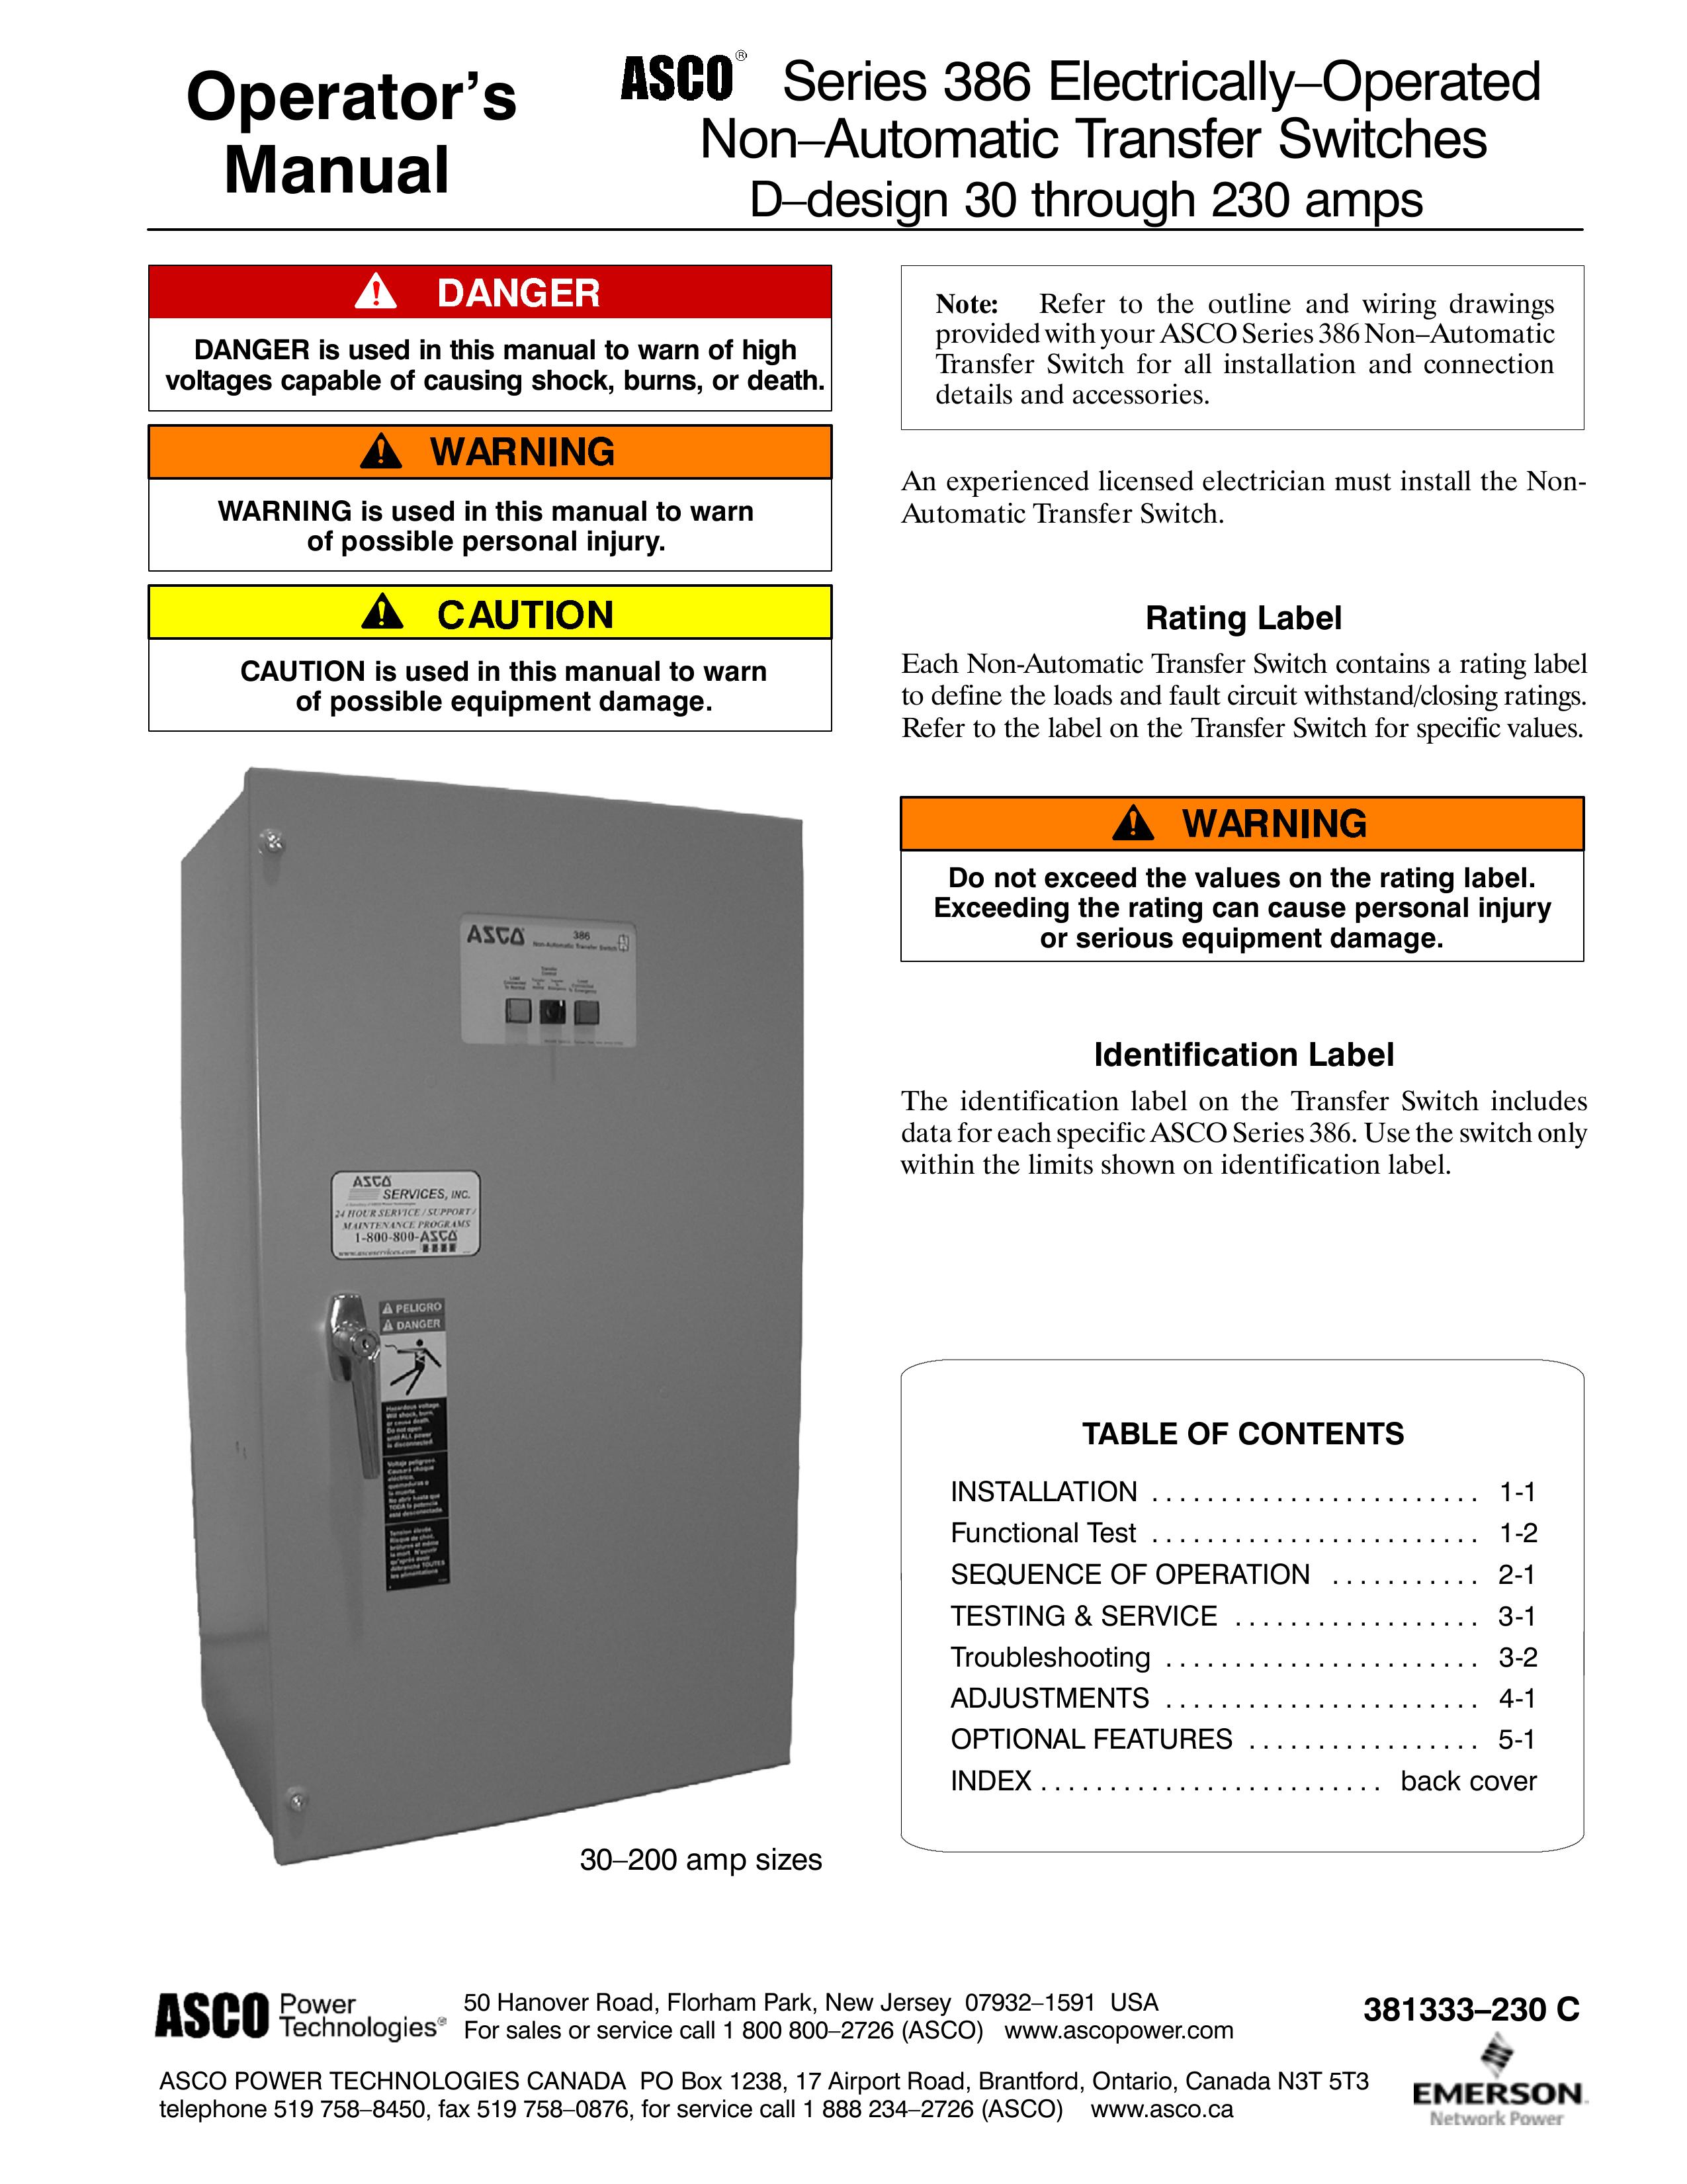 Emerson 381333230 Personal Lift User Manual